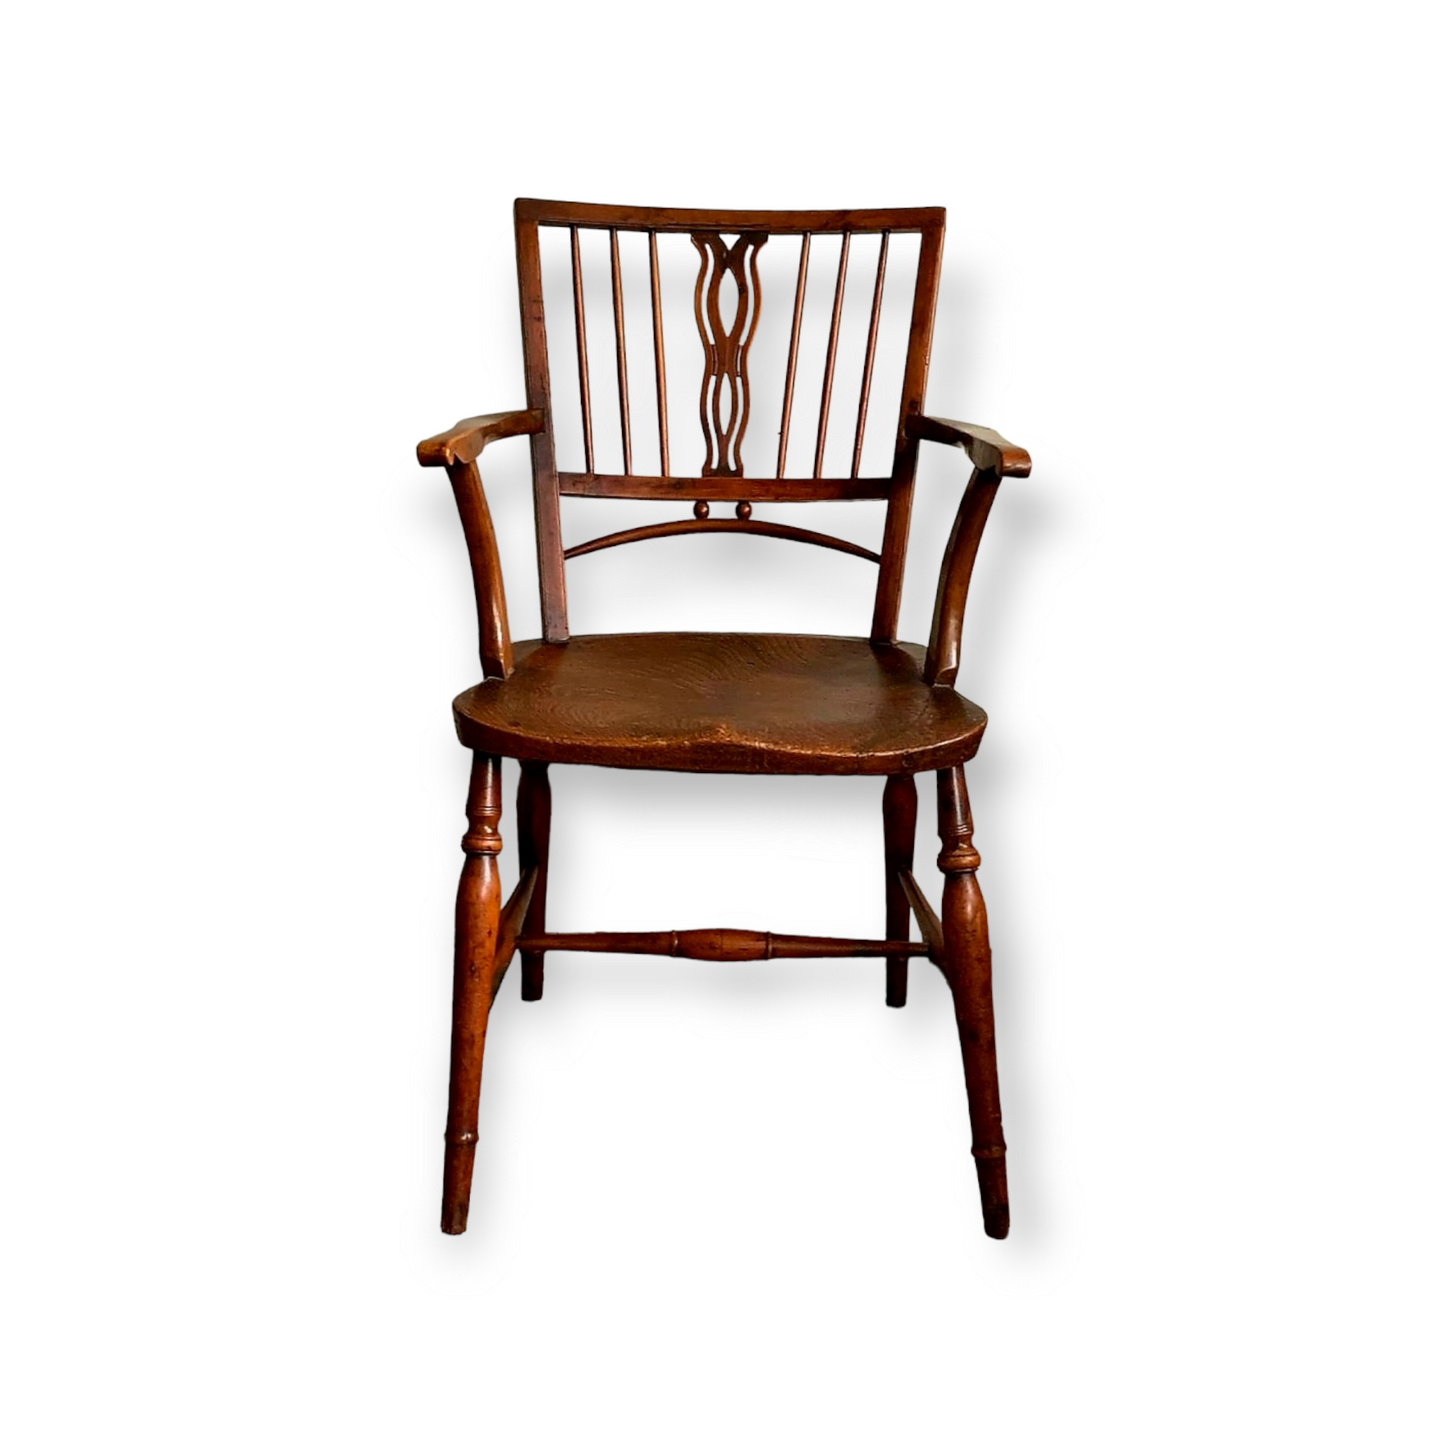 George III Period English Antique Yew Wood Mendlesham Chair / Armchair, circa 1800